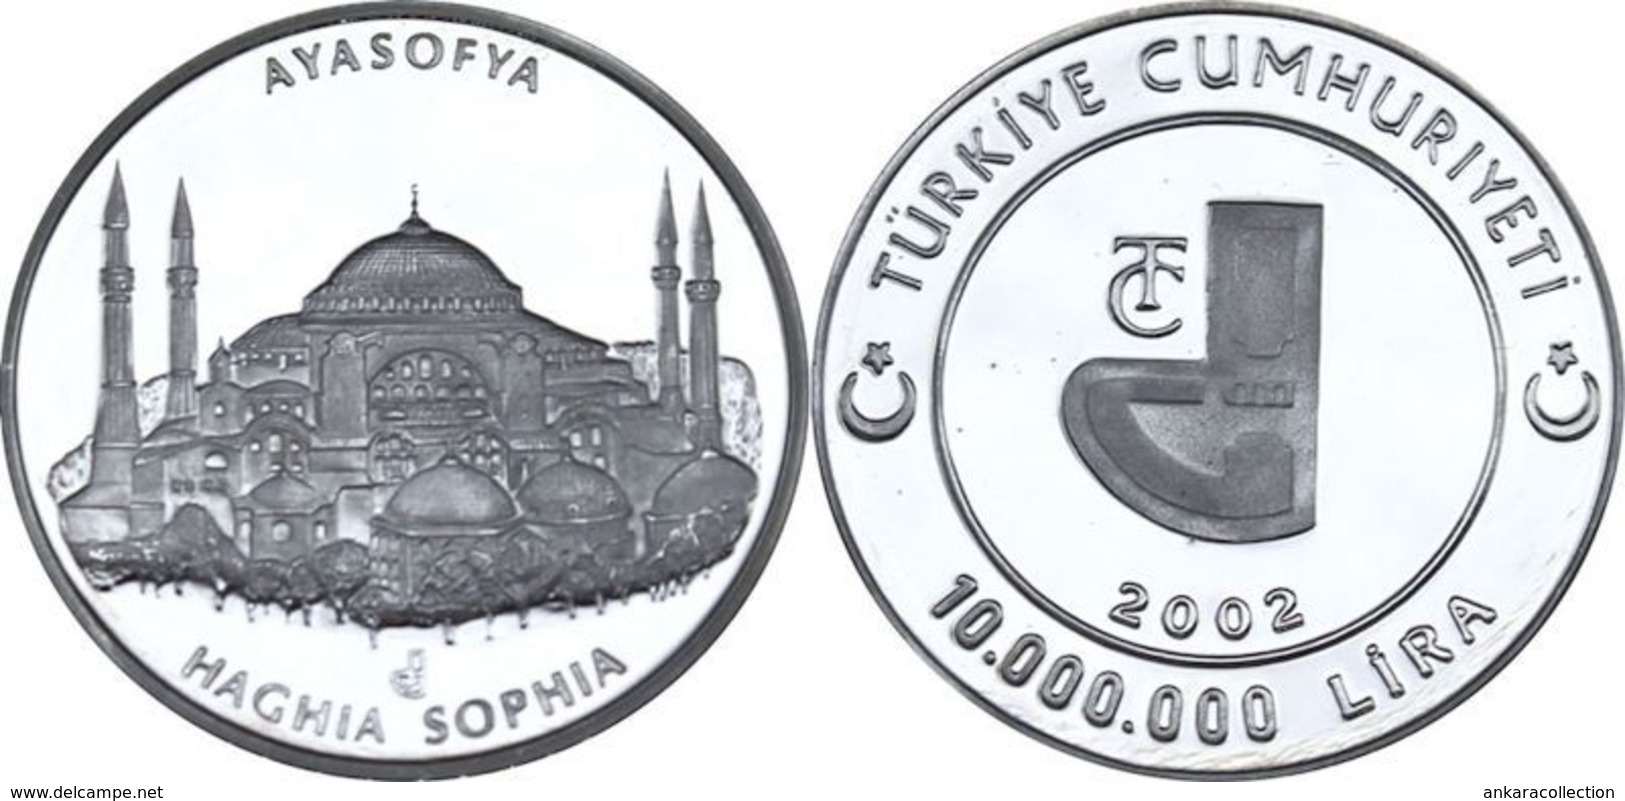 AC - HAGIA SOPHIA - AYA SOFYA MOSQUE COMMEMORATIVE SILVER COIN TURKEY 2002 PROOF UNCIRCULATED - Turchia